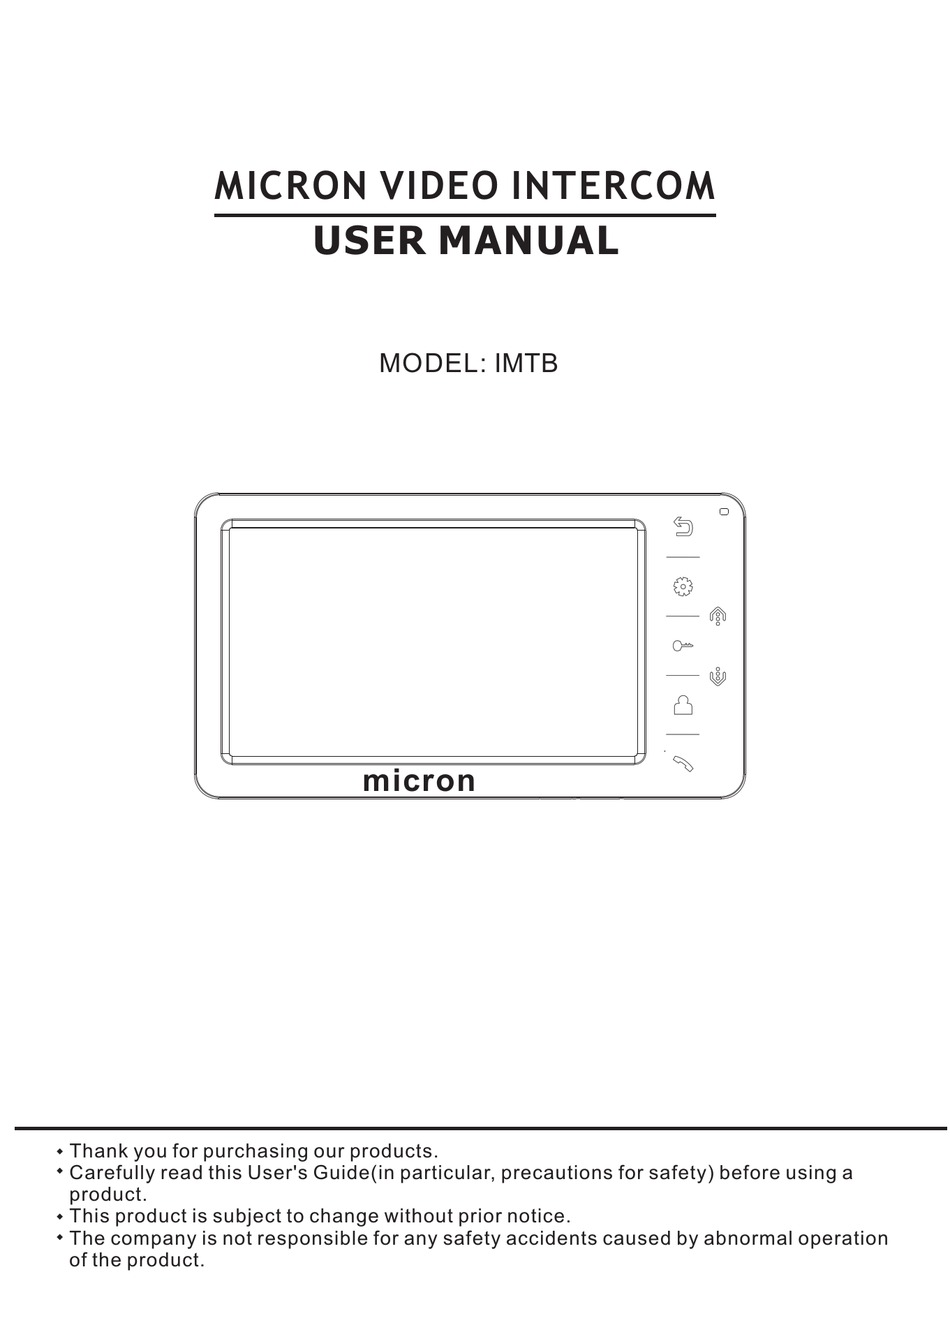 micromate manual